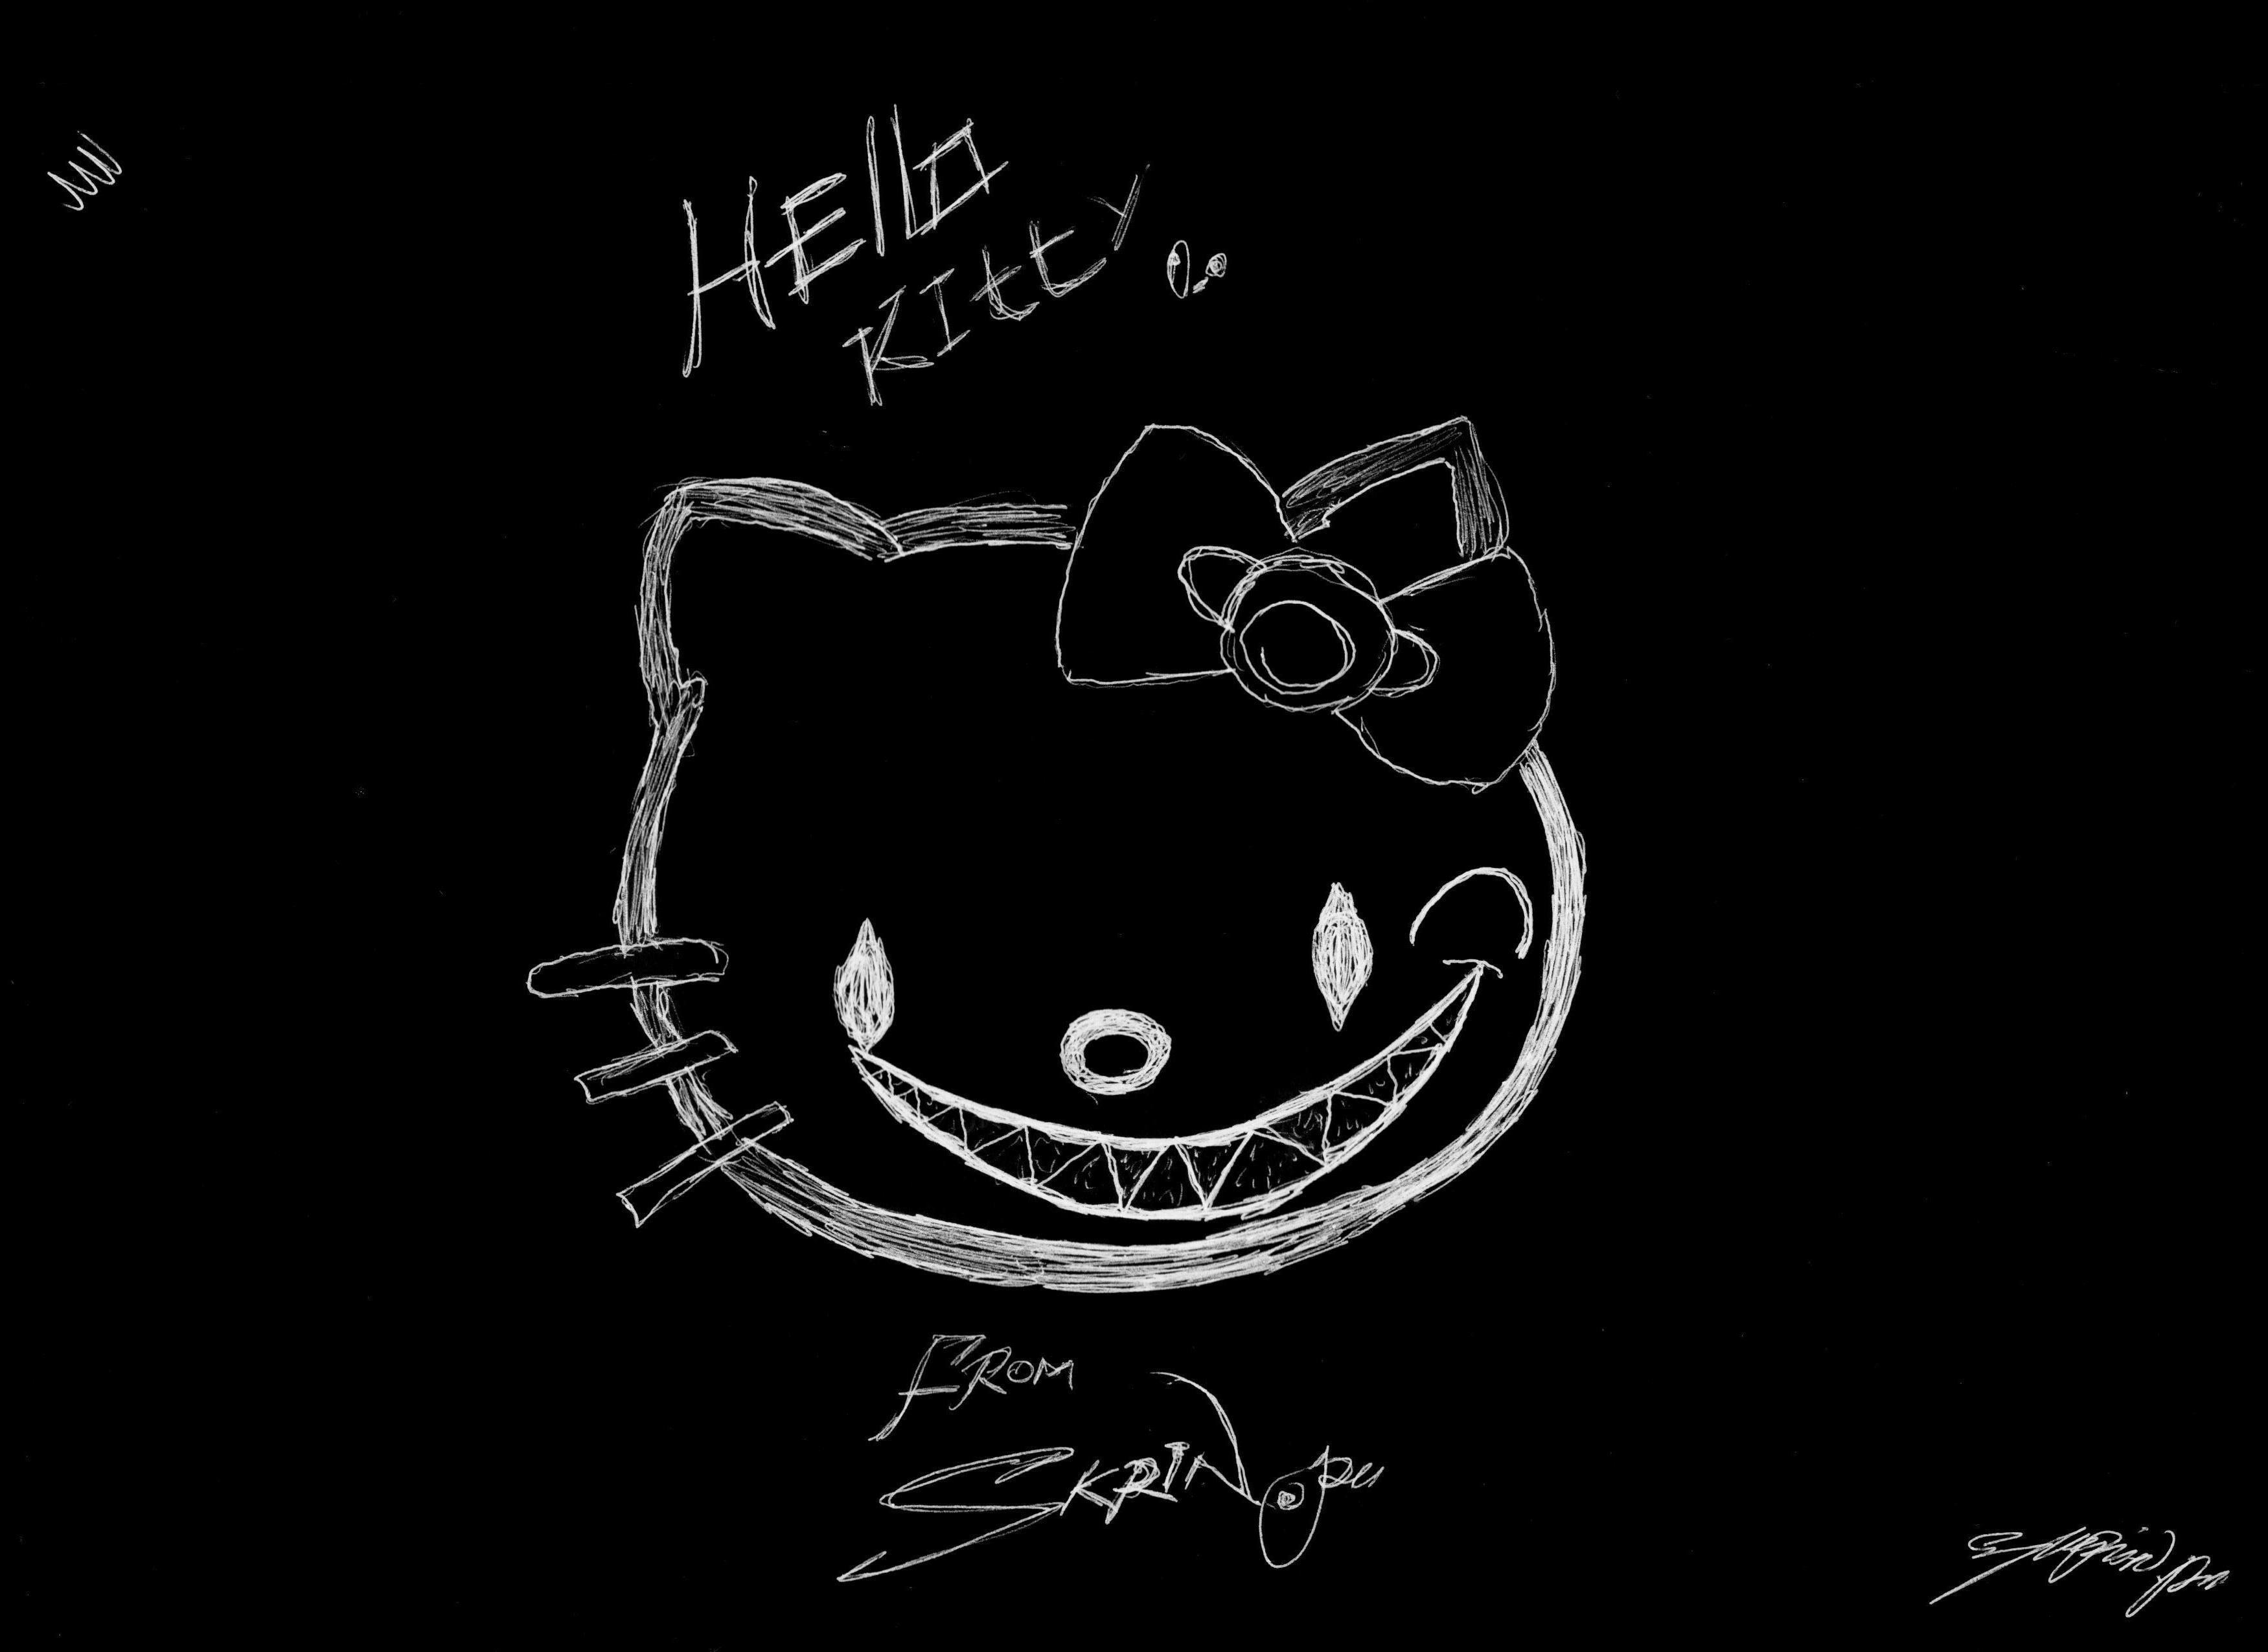 Black Hello Kitty Background